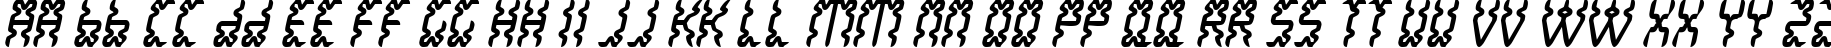 Пример написания английского алфавита шрифтом WhiteLake